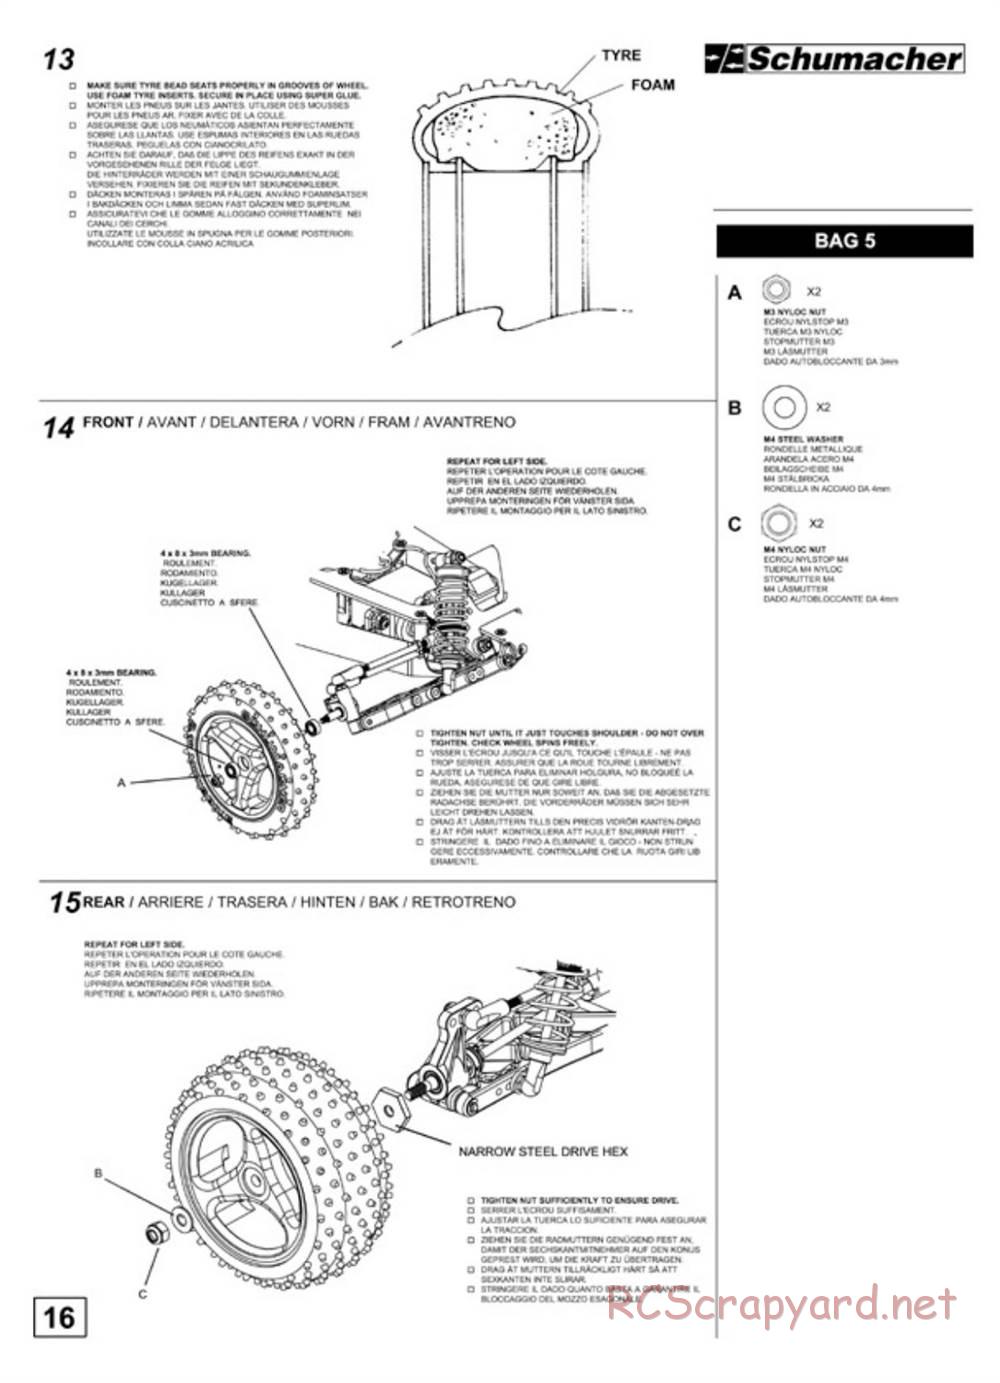 Schumacher - Fireblade Evo - Manual - Page 18